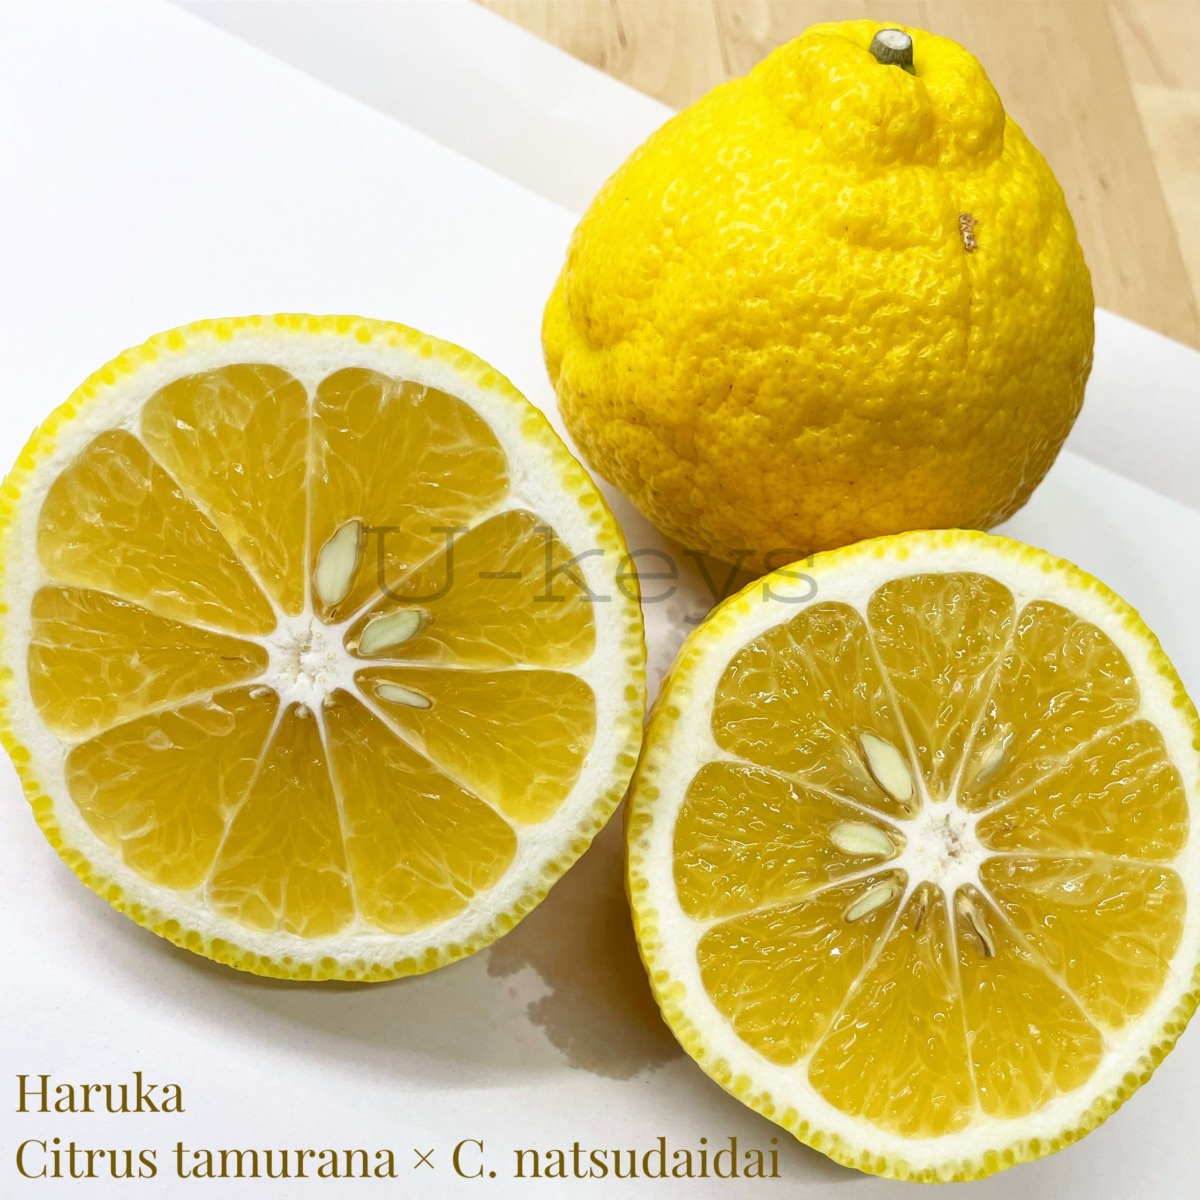 Haruka,Citrus tamurana x Citrus natsudaidai